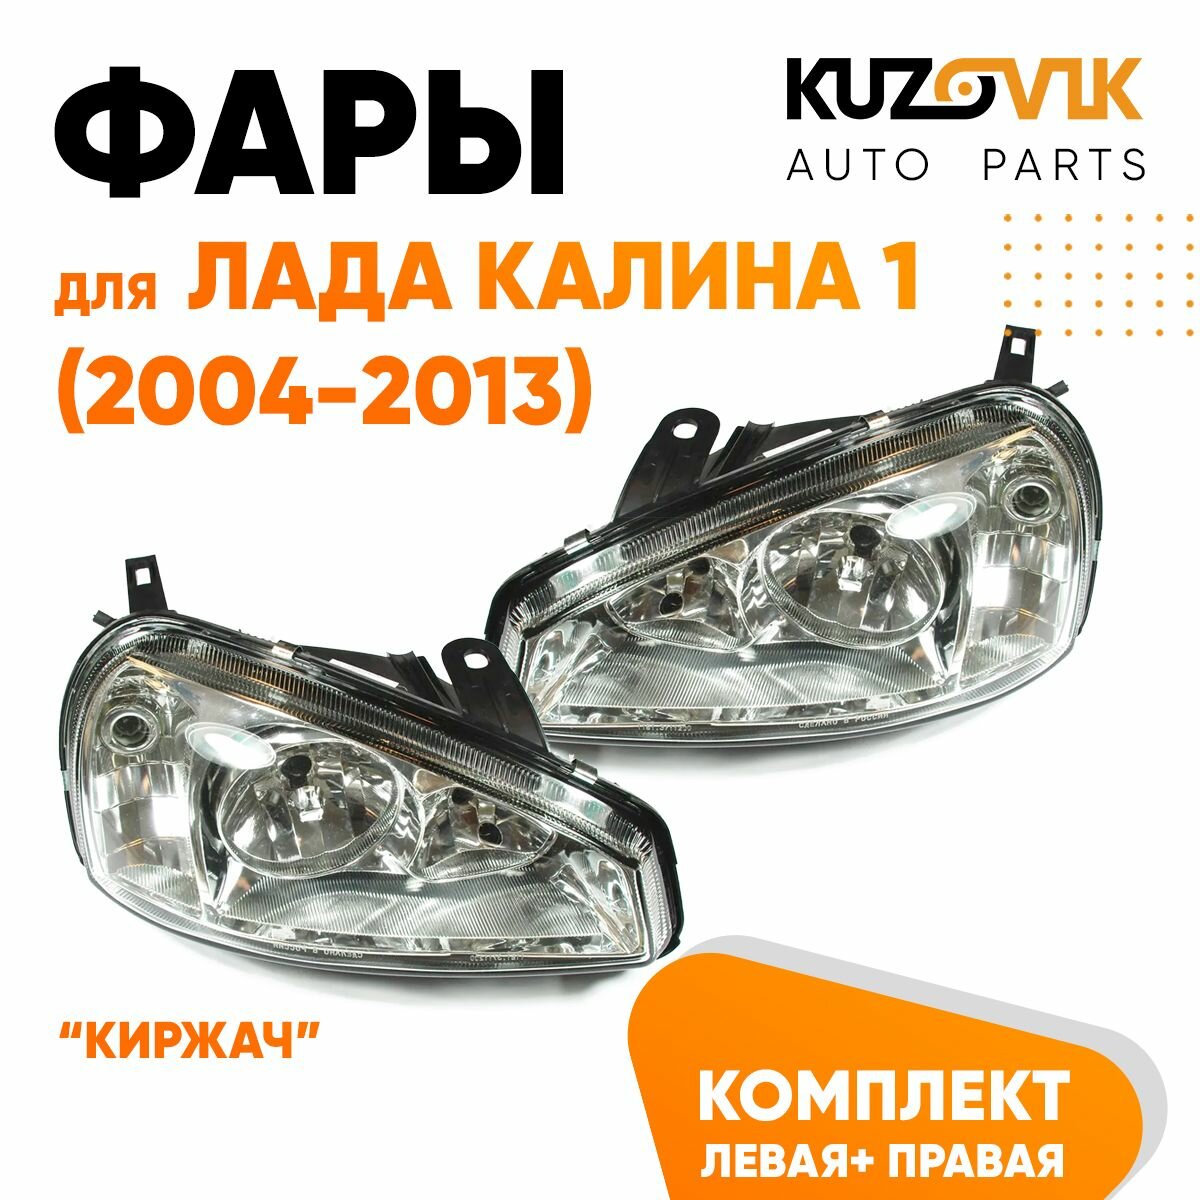 Фары для Лада Калина 1 (2004-2013) тип Киржач пластик комплект 2 штуки левая + правая